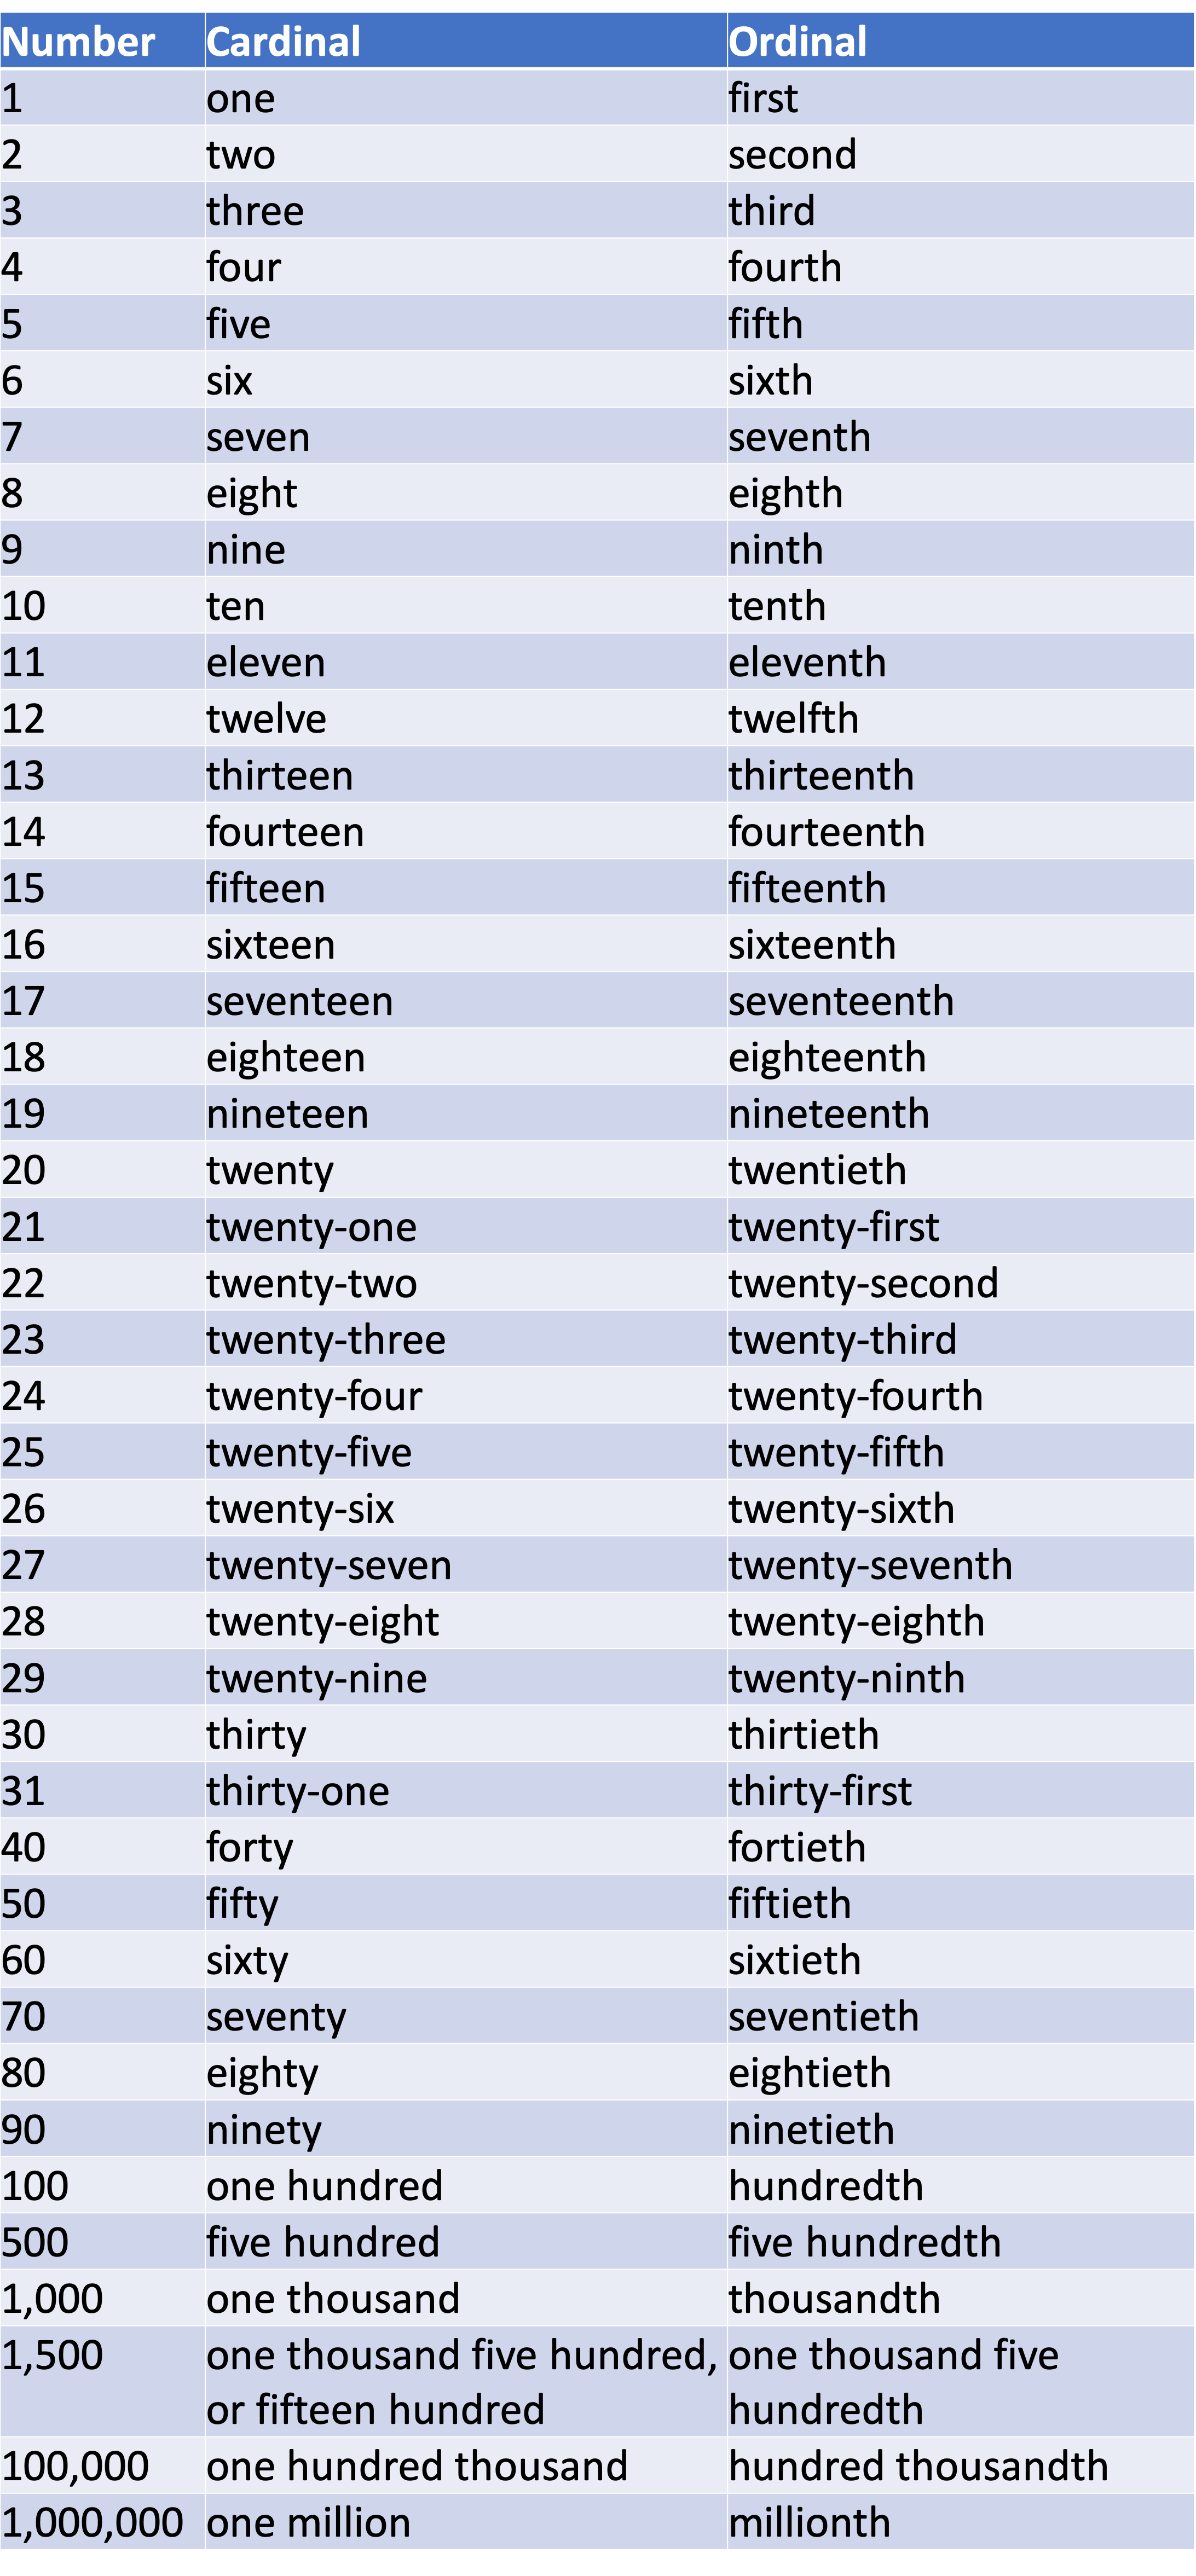 Numbers in English TEFL - Cardinal, Ordinal, Dates, Measurements